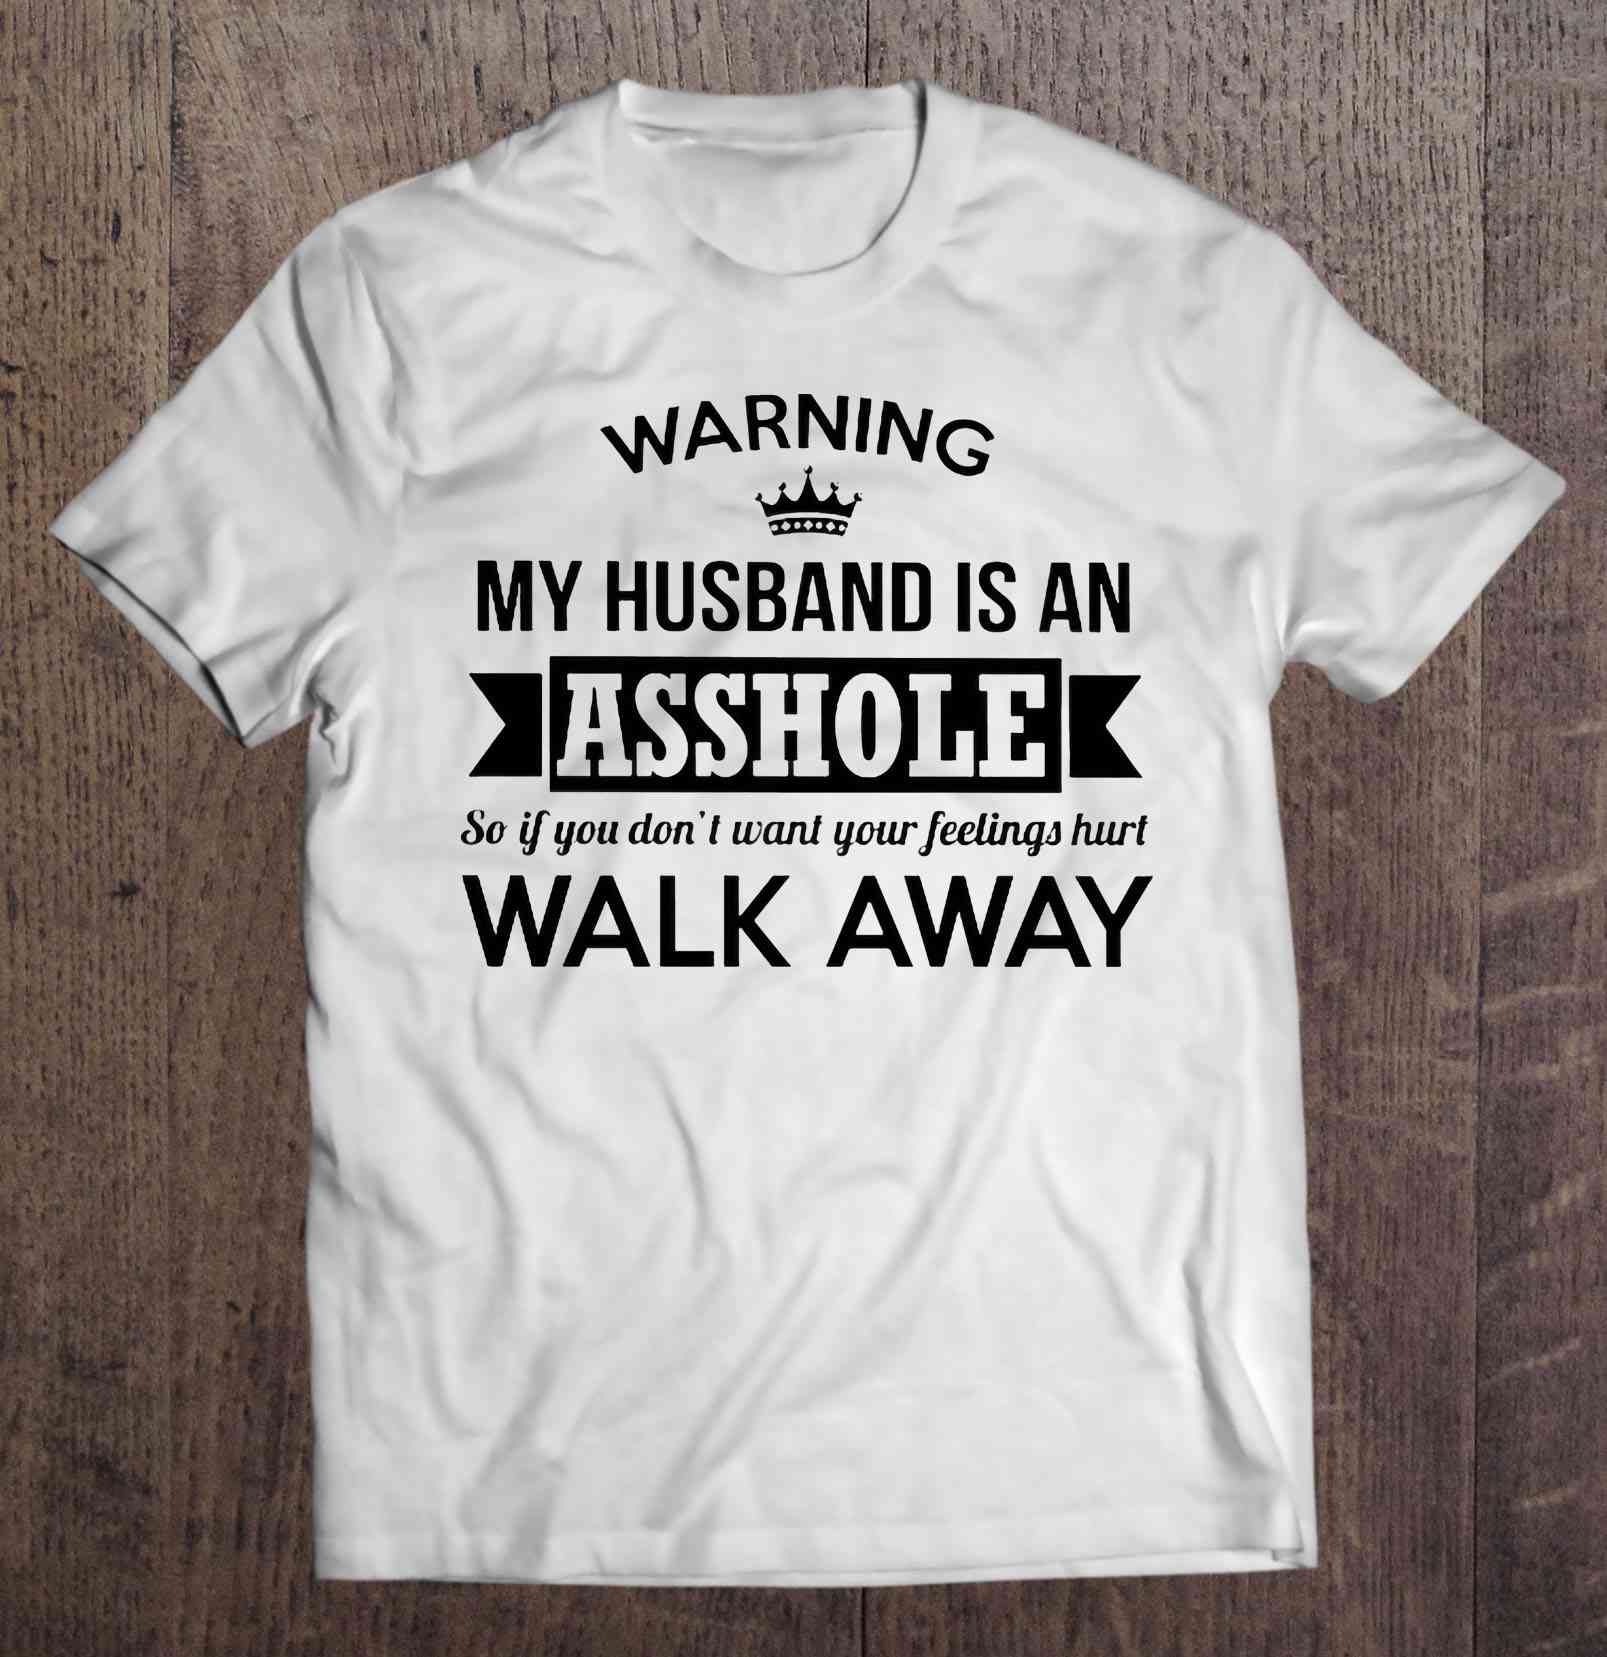 Bad Husband shirt My husband is an asshole so if you don’t want your feelings hurt walk away Hoodies Sweatshirts Hoodies Sweatshirts